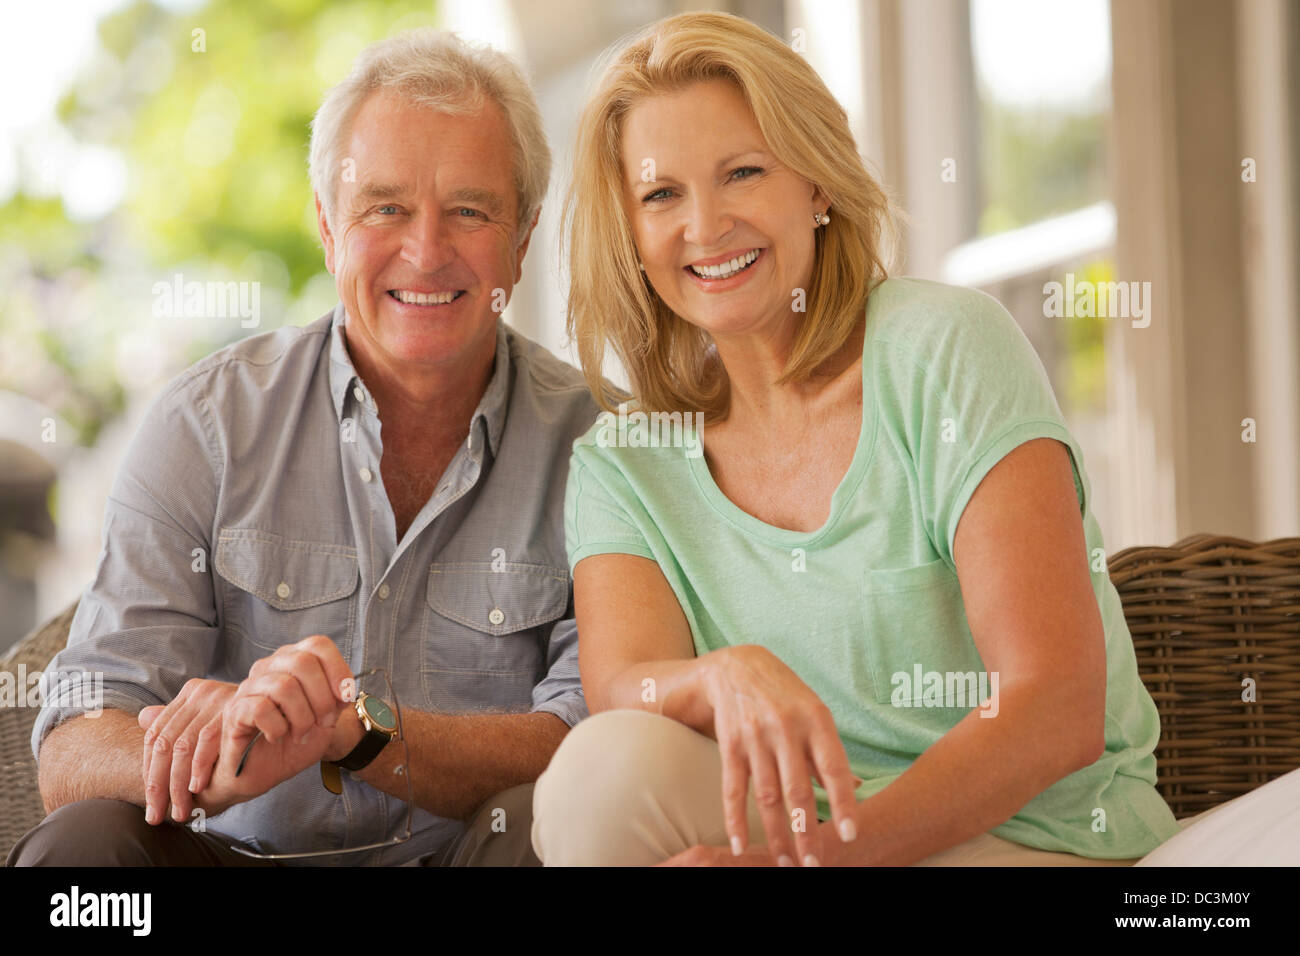 Portrait of smiling couple on patio Stock Photo